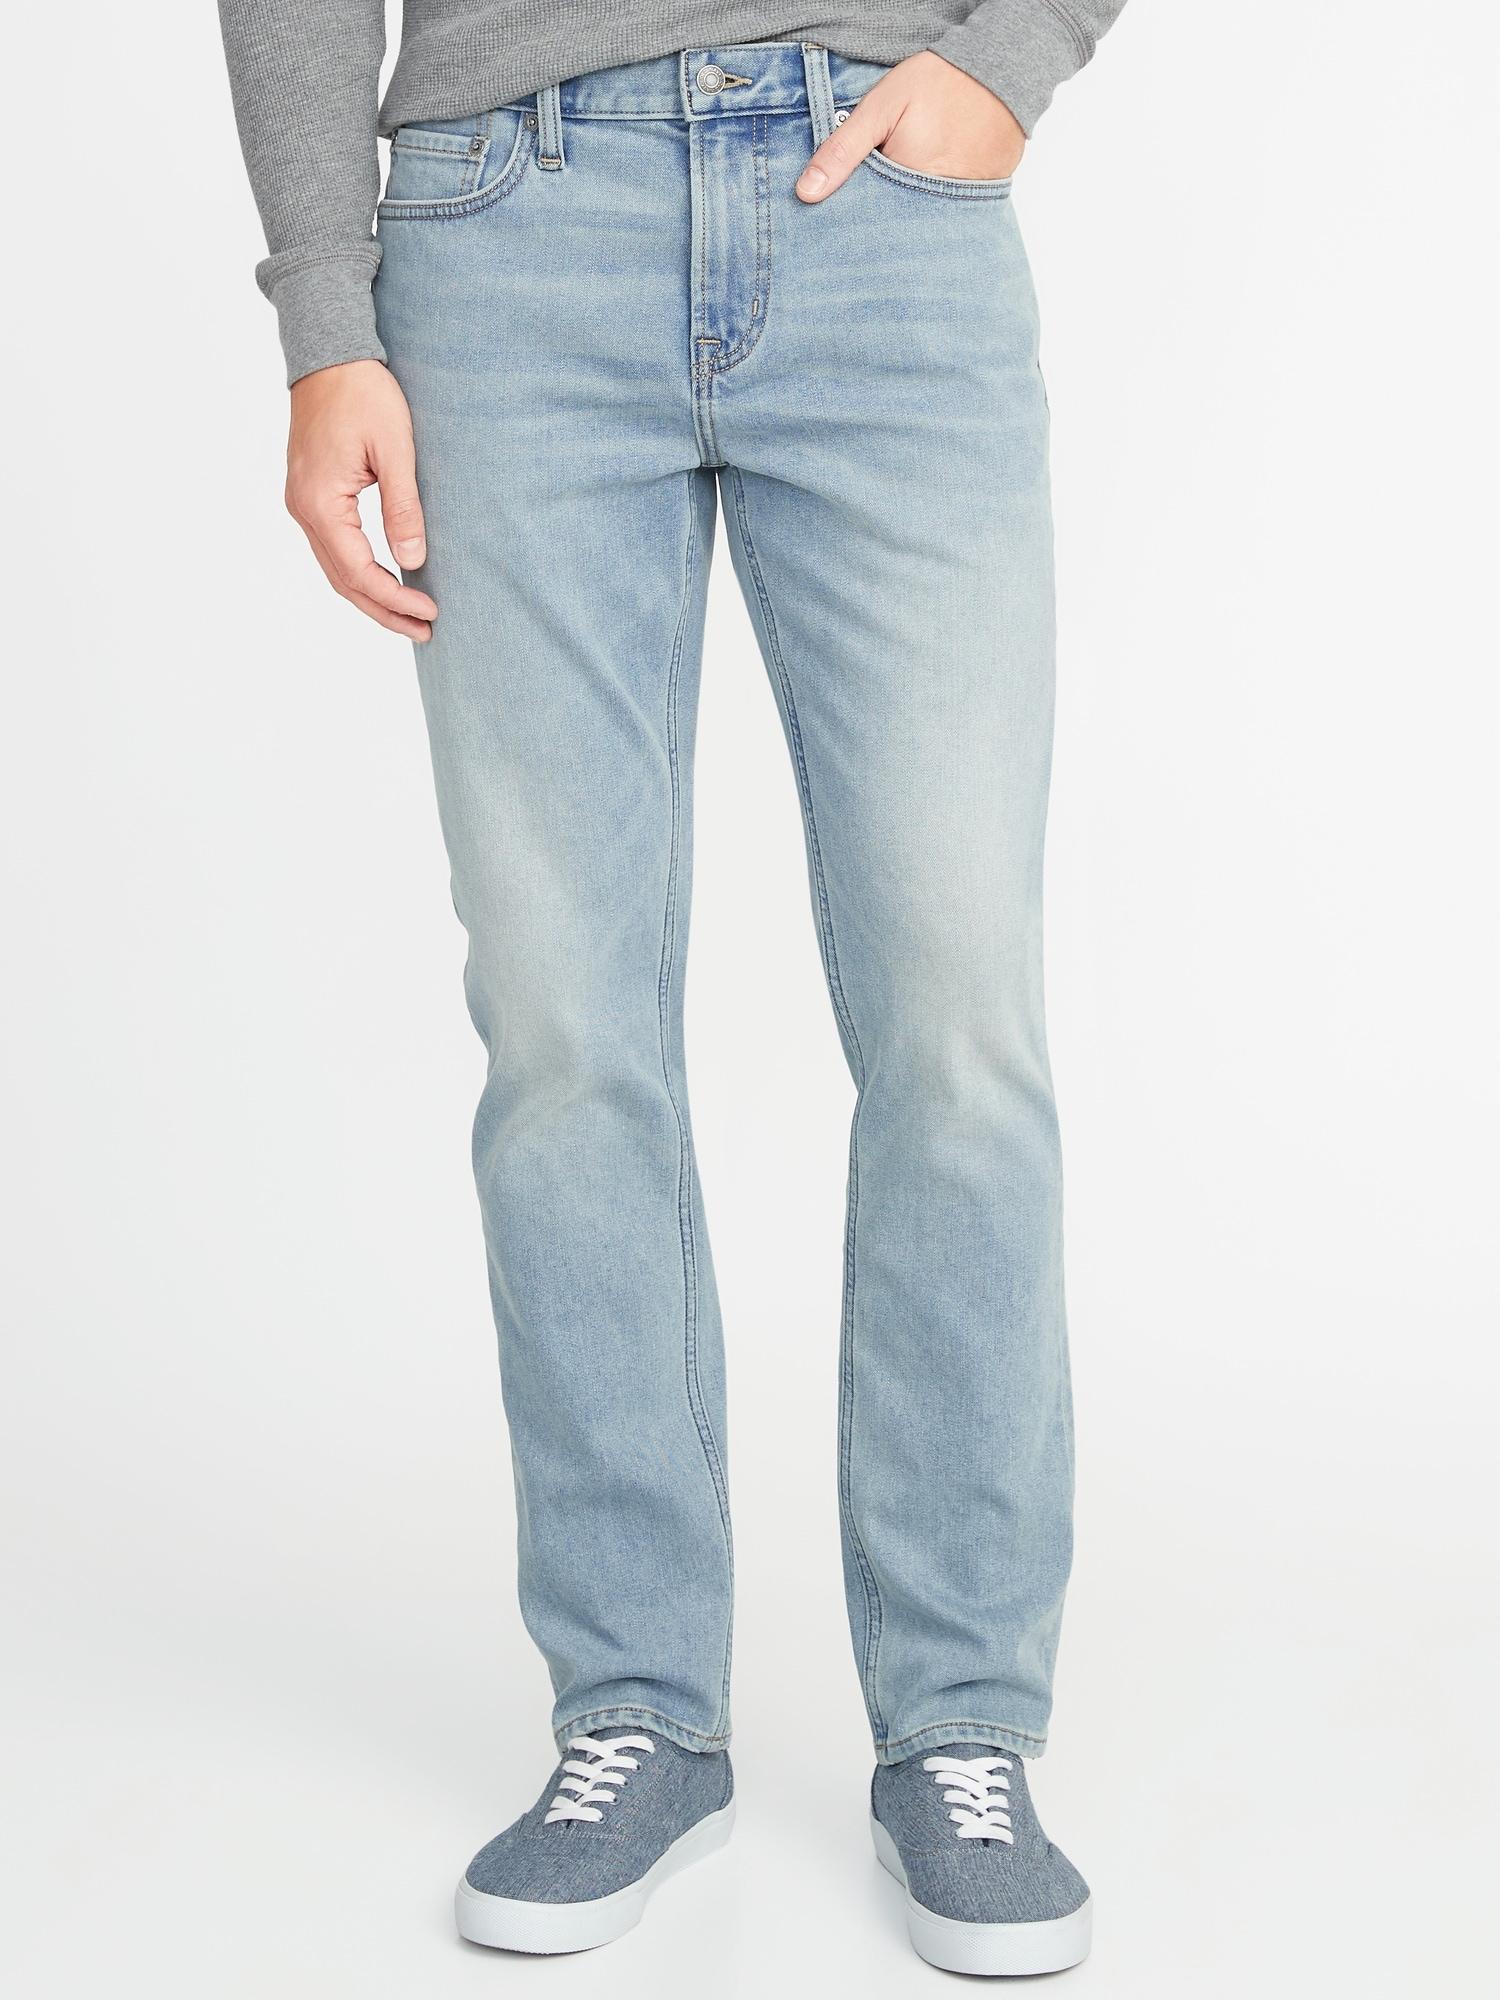 old navy blue jeans sale